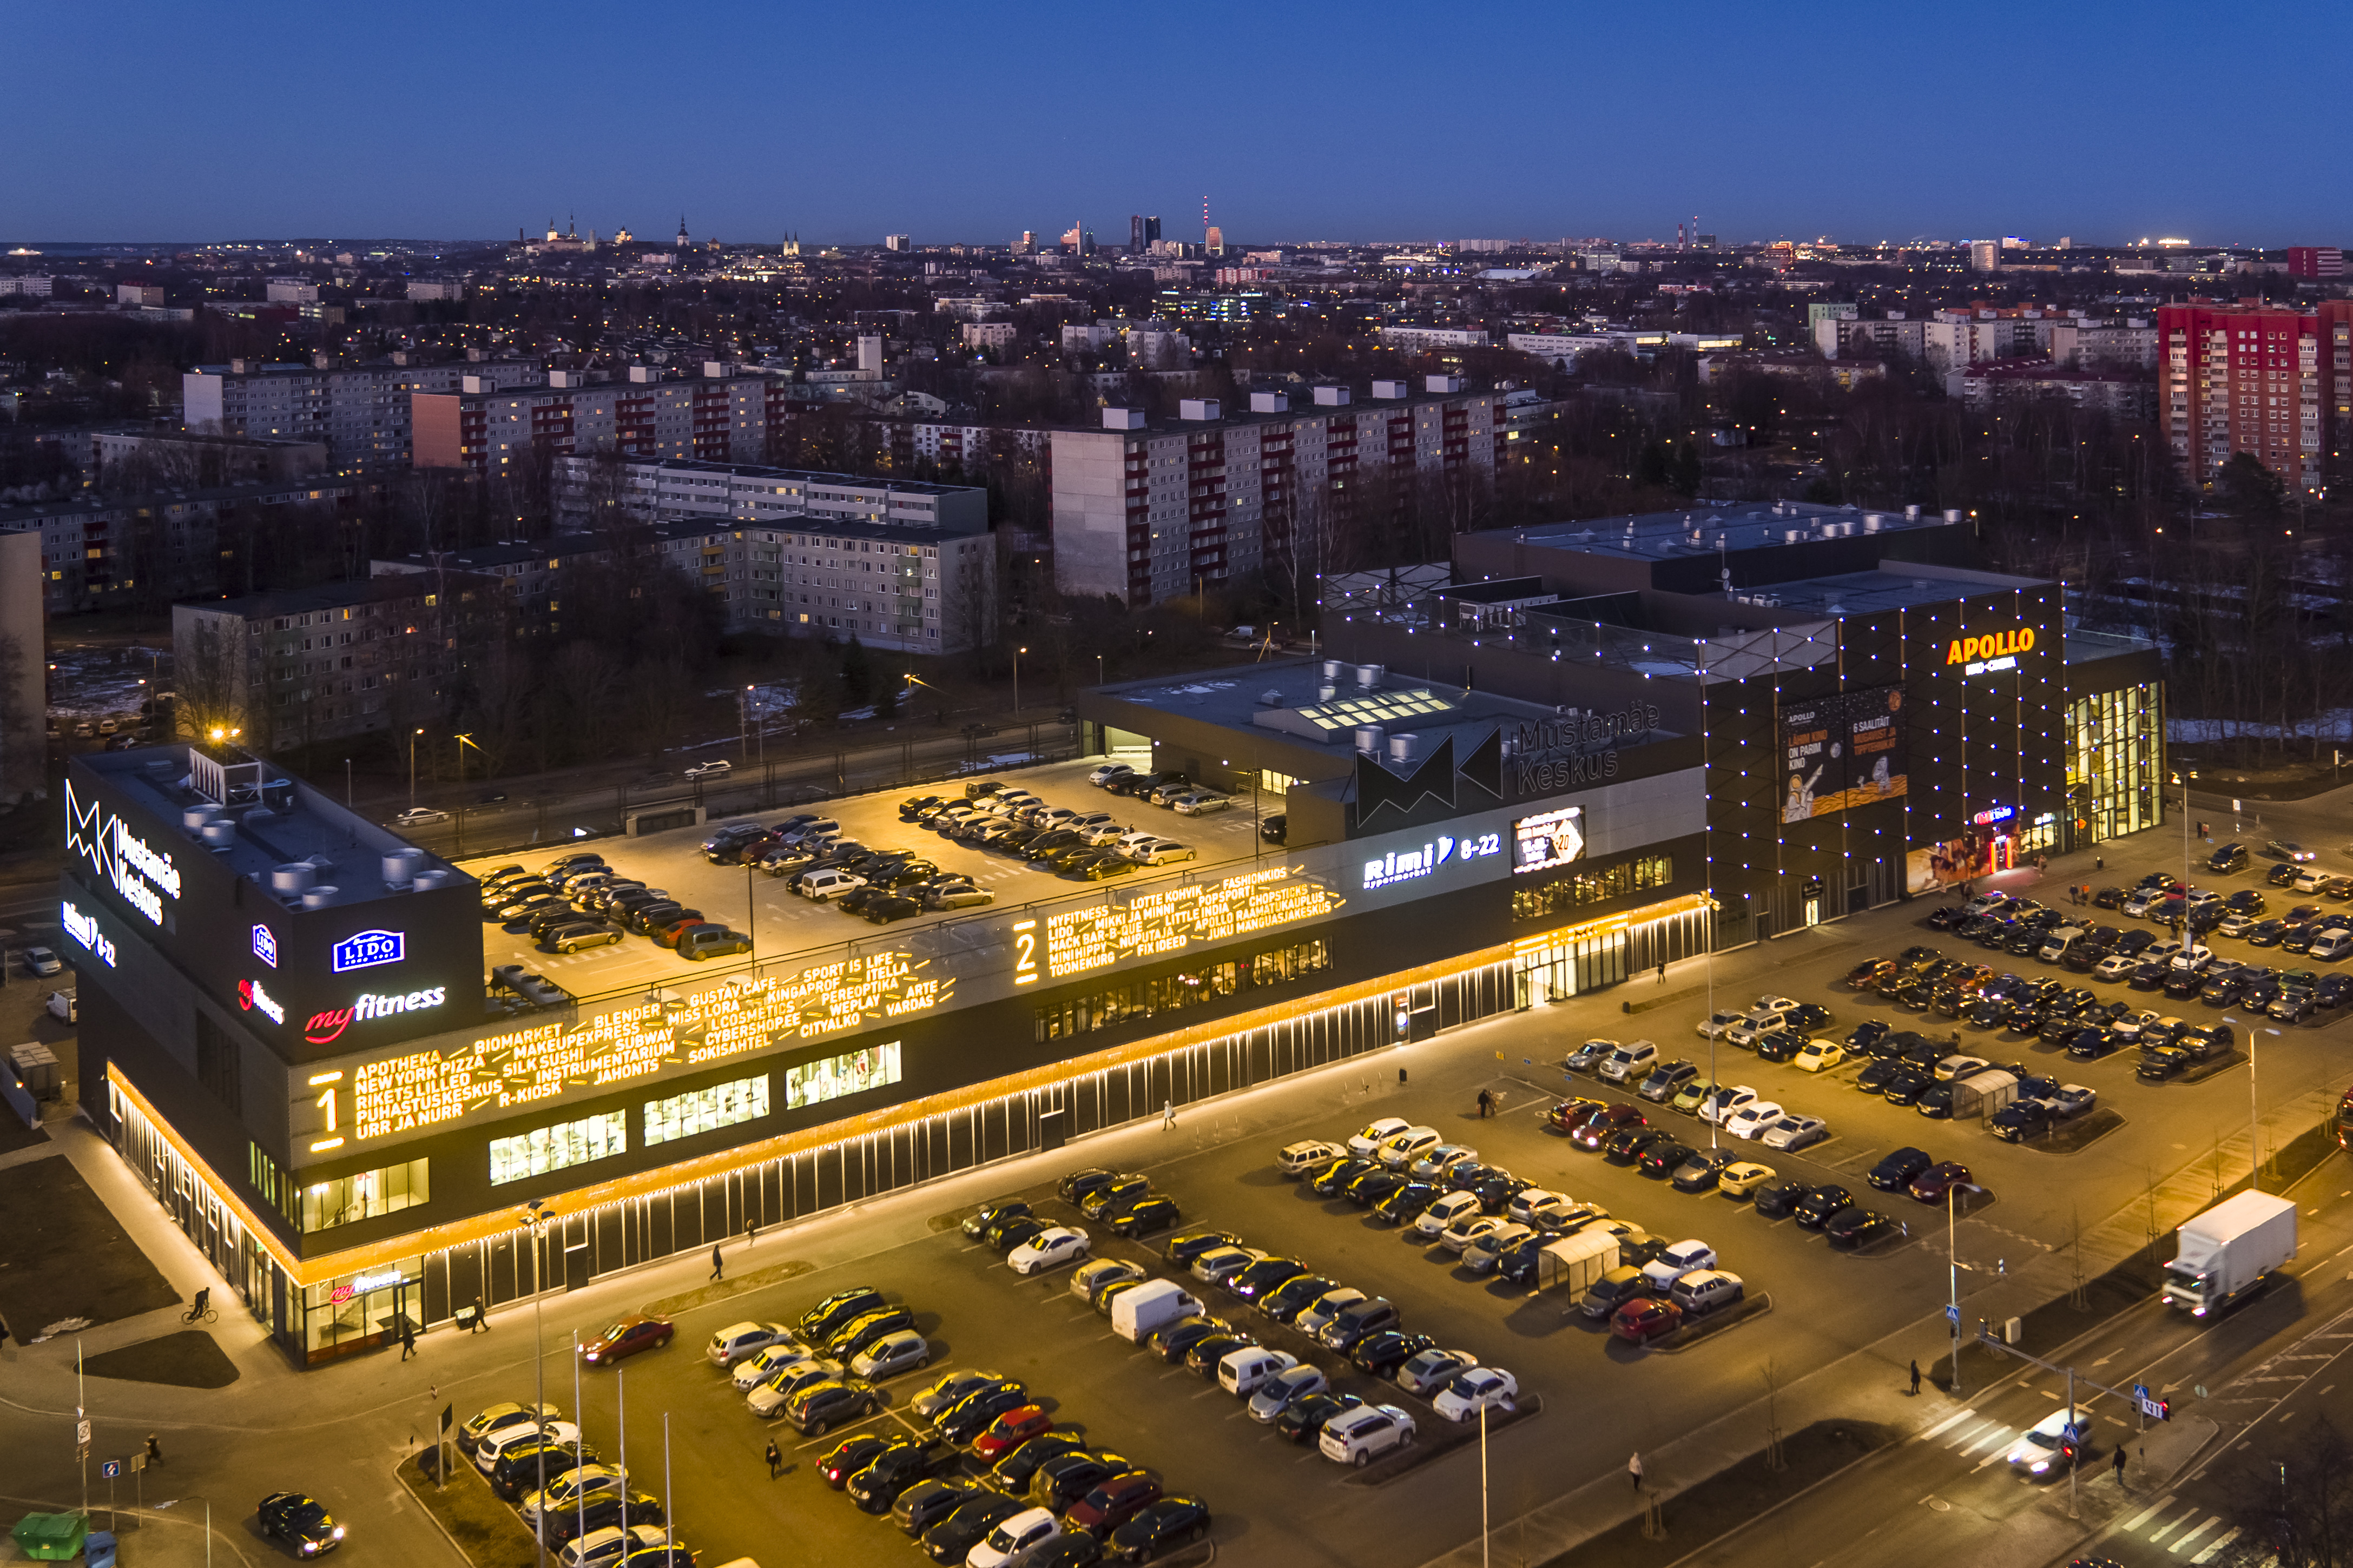 Mustamäe Keskus shopping centre in Tallinn.